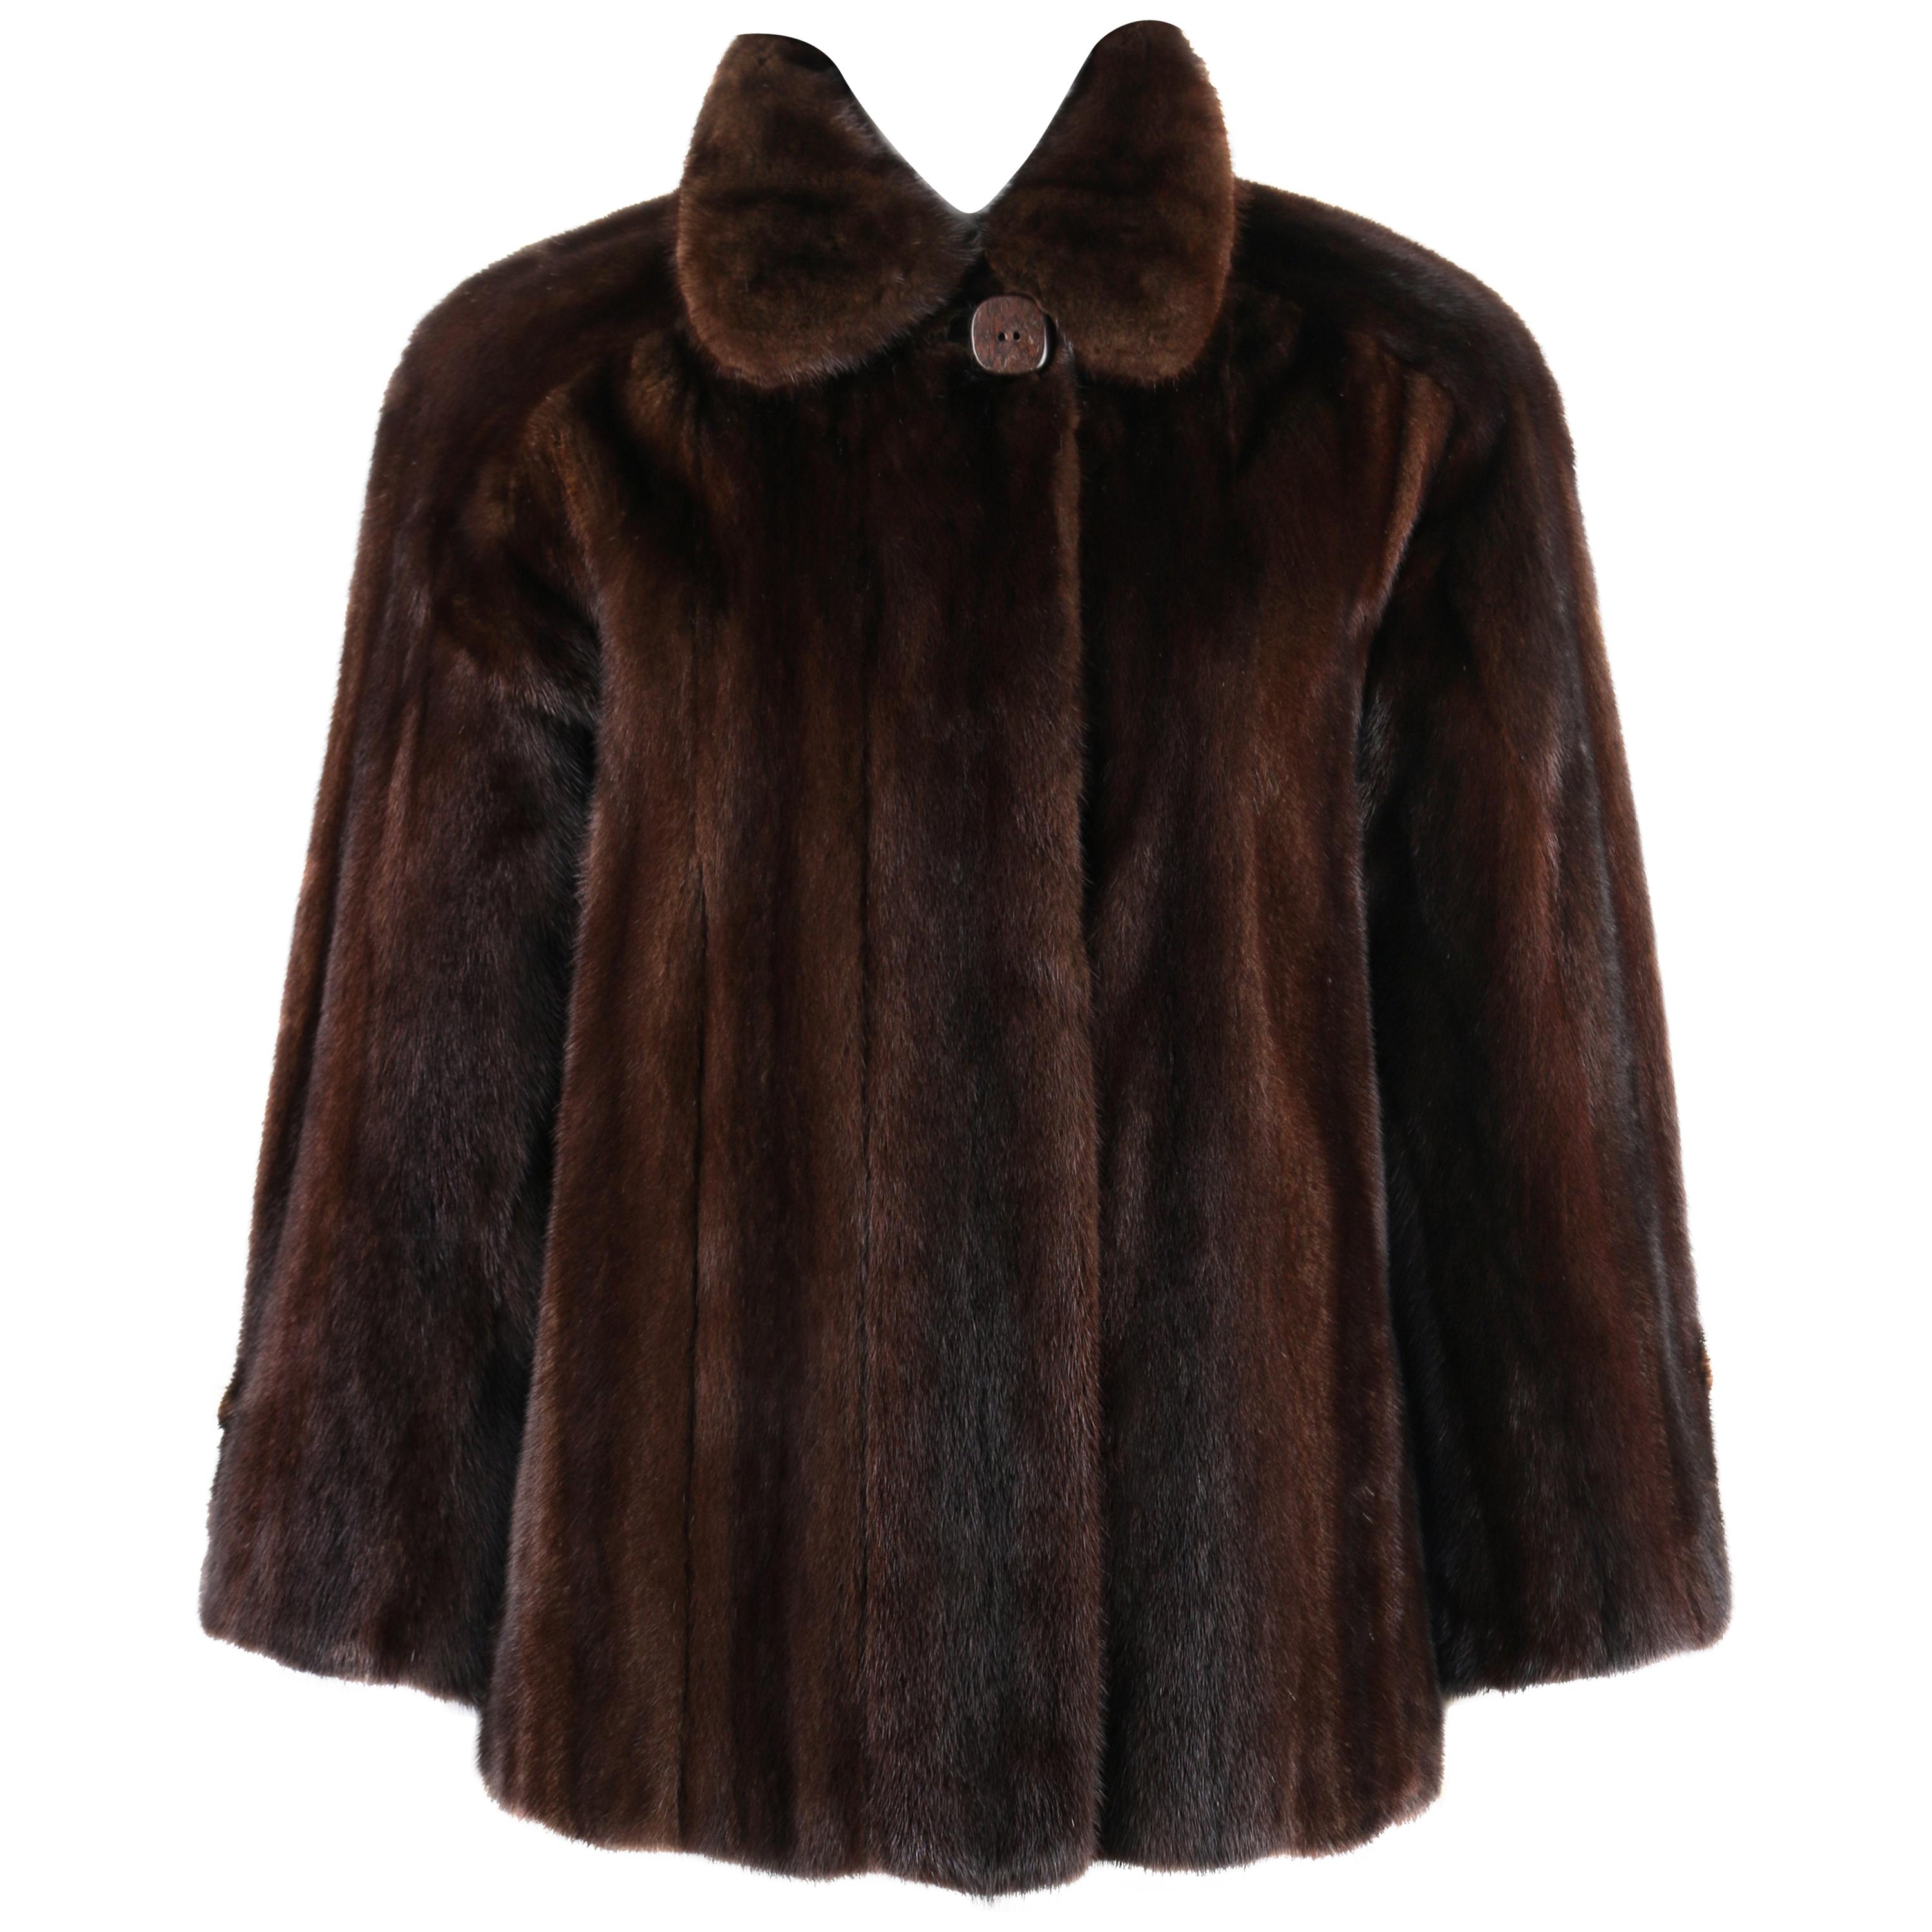 GEOFFREY BEENE c.1980's Dark Brown Genuine Mink Fur Jacket Coat